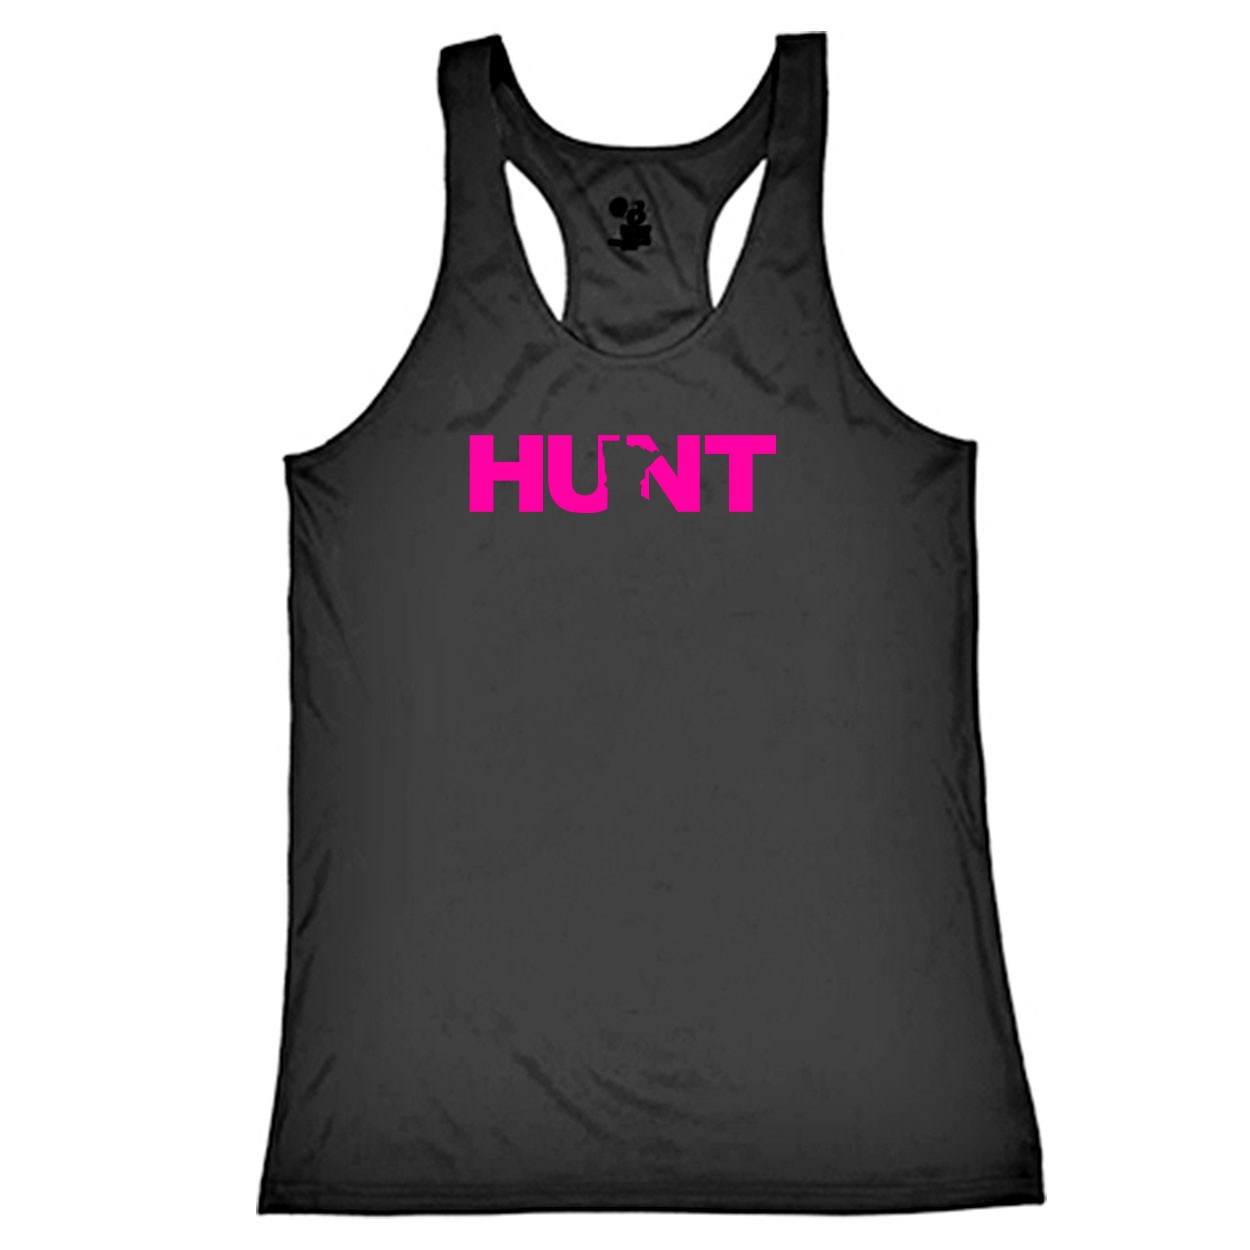 Hunt Minnesota Classic Youth Girls Performance Racerback Tank Top Black (Pink Logo)